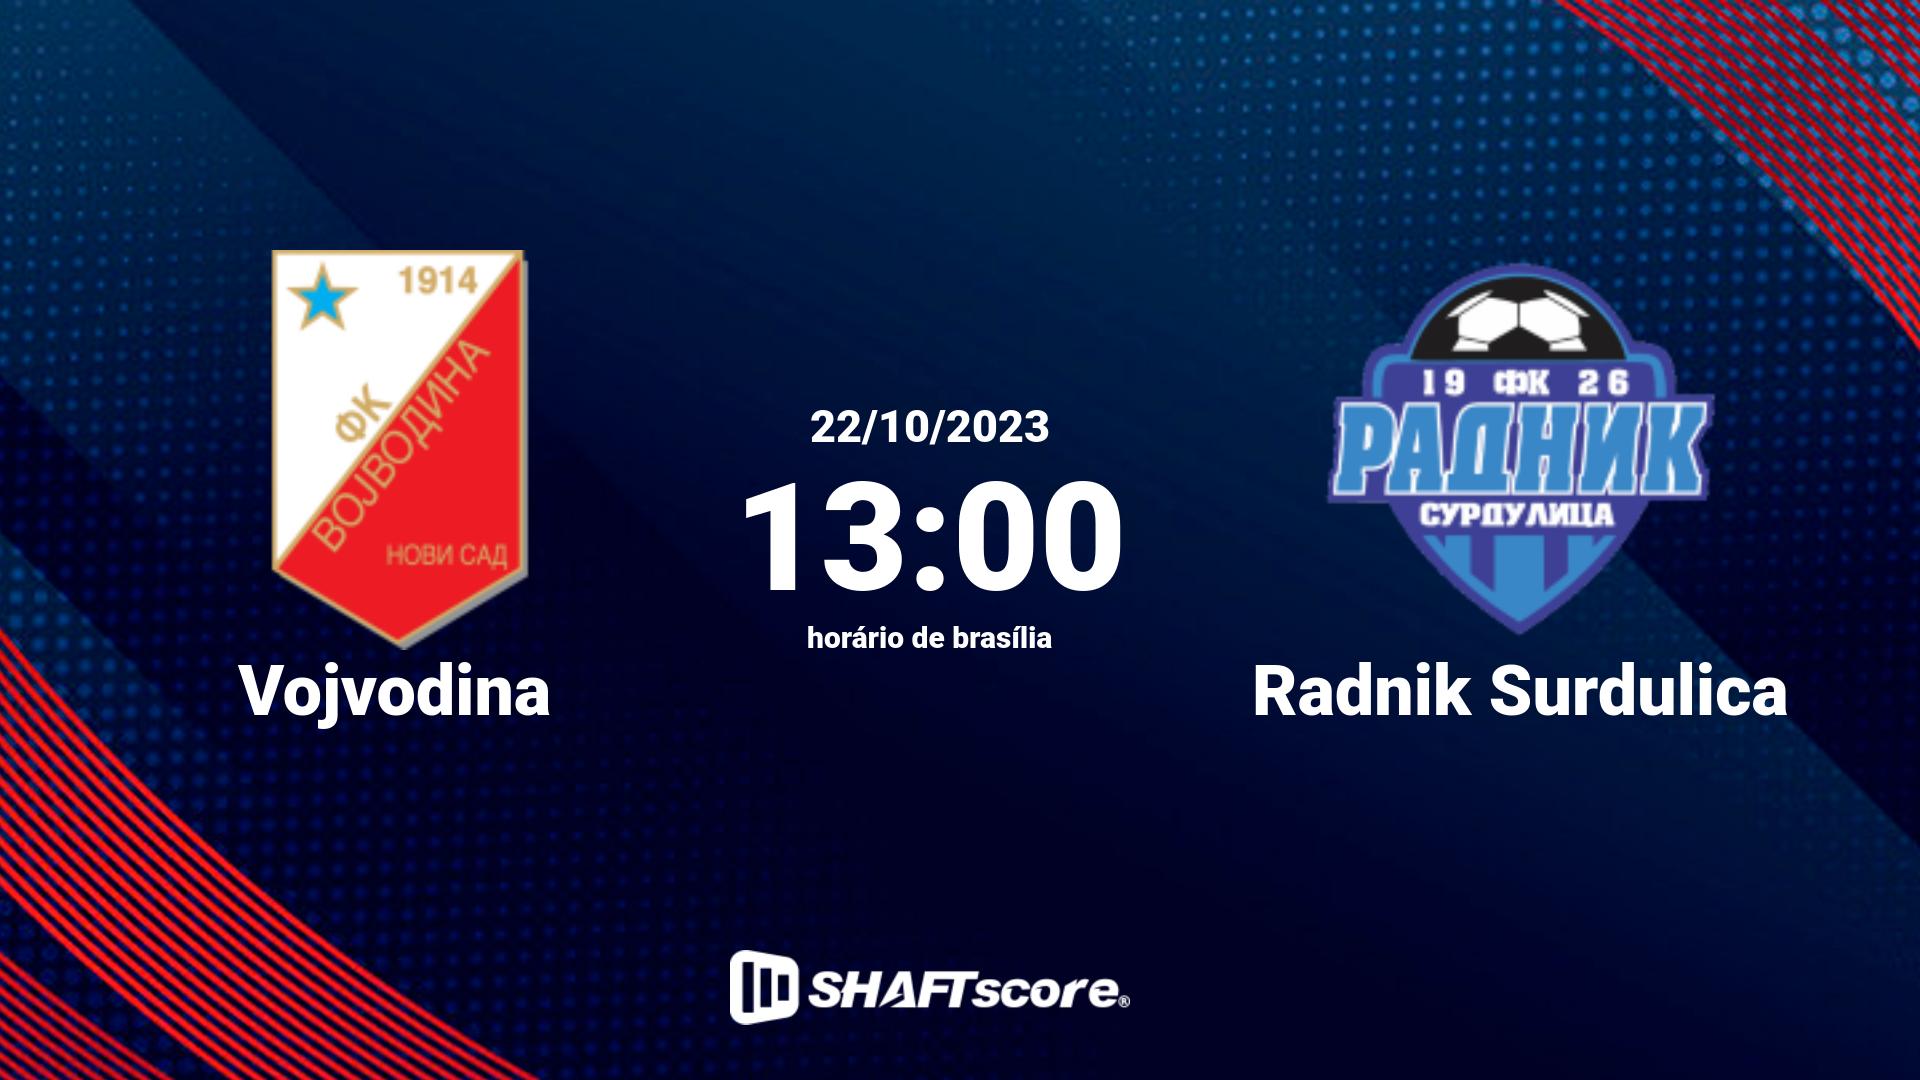 Estatísticas do jogo Vojvodina vs Radnik Surdulica 22.10 13:00